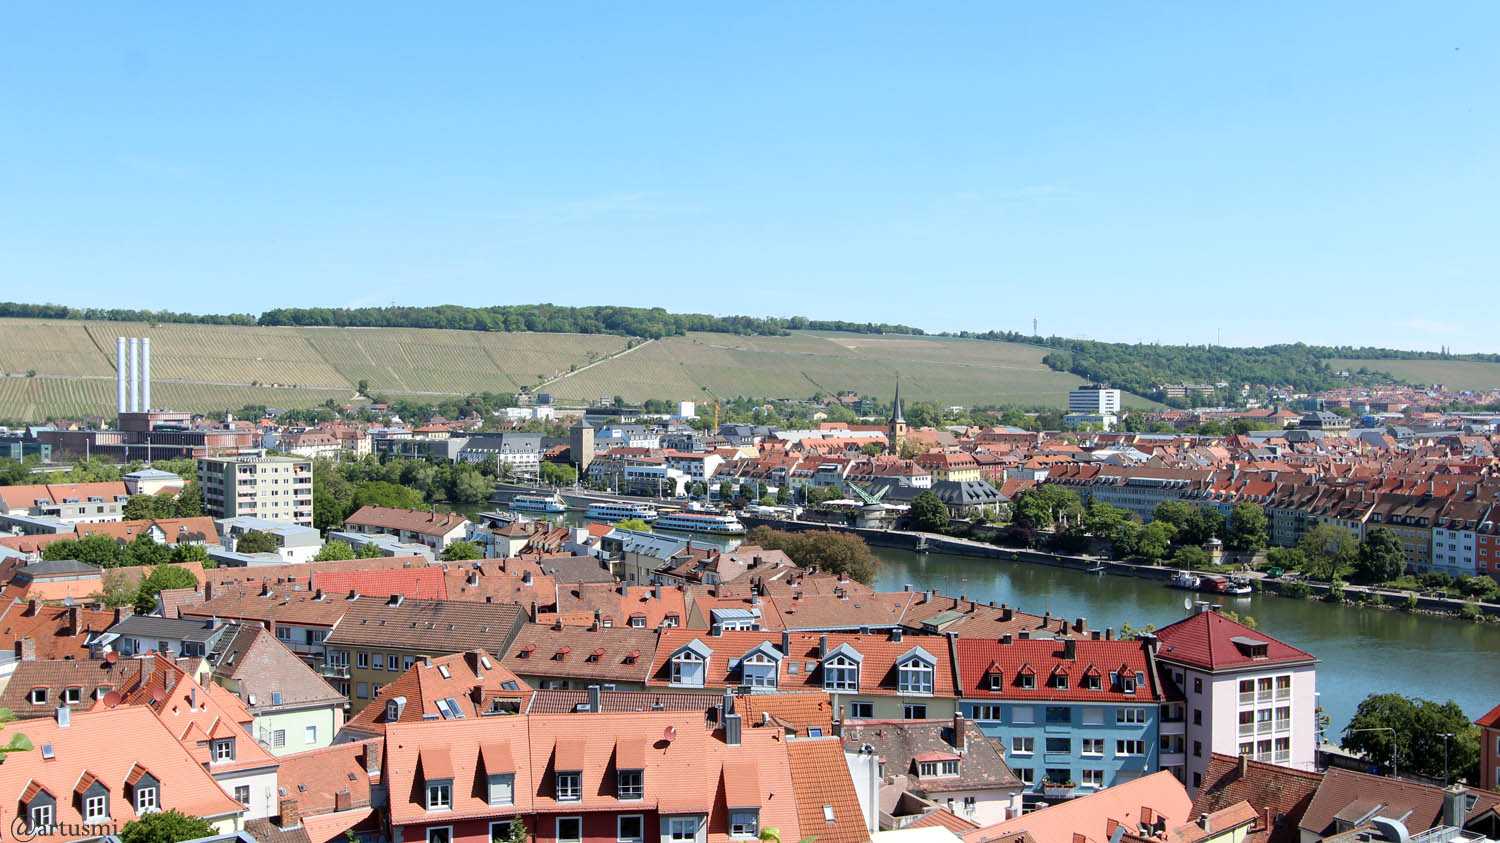 Würzburg am Main am 18. Mai 2020